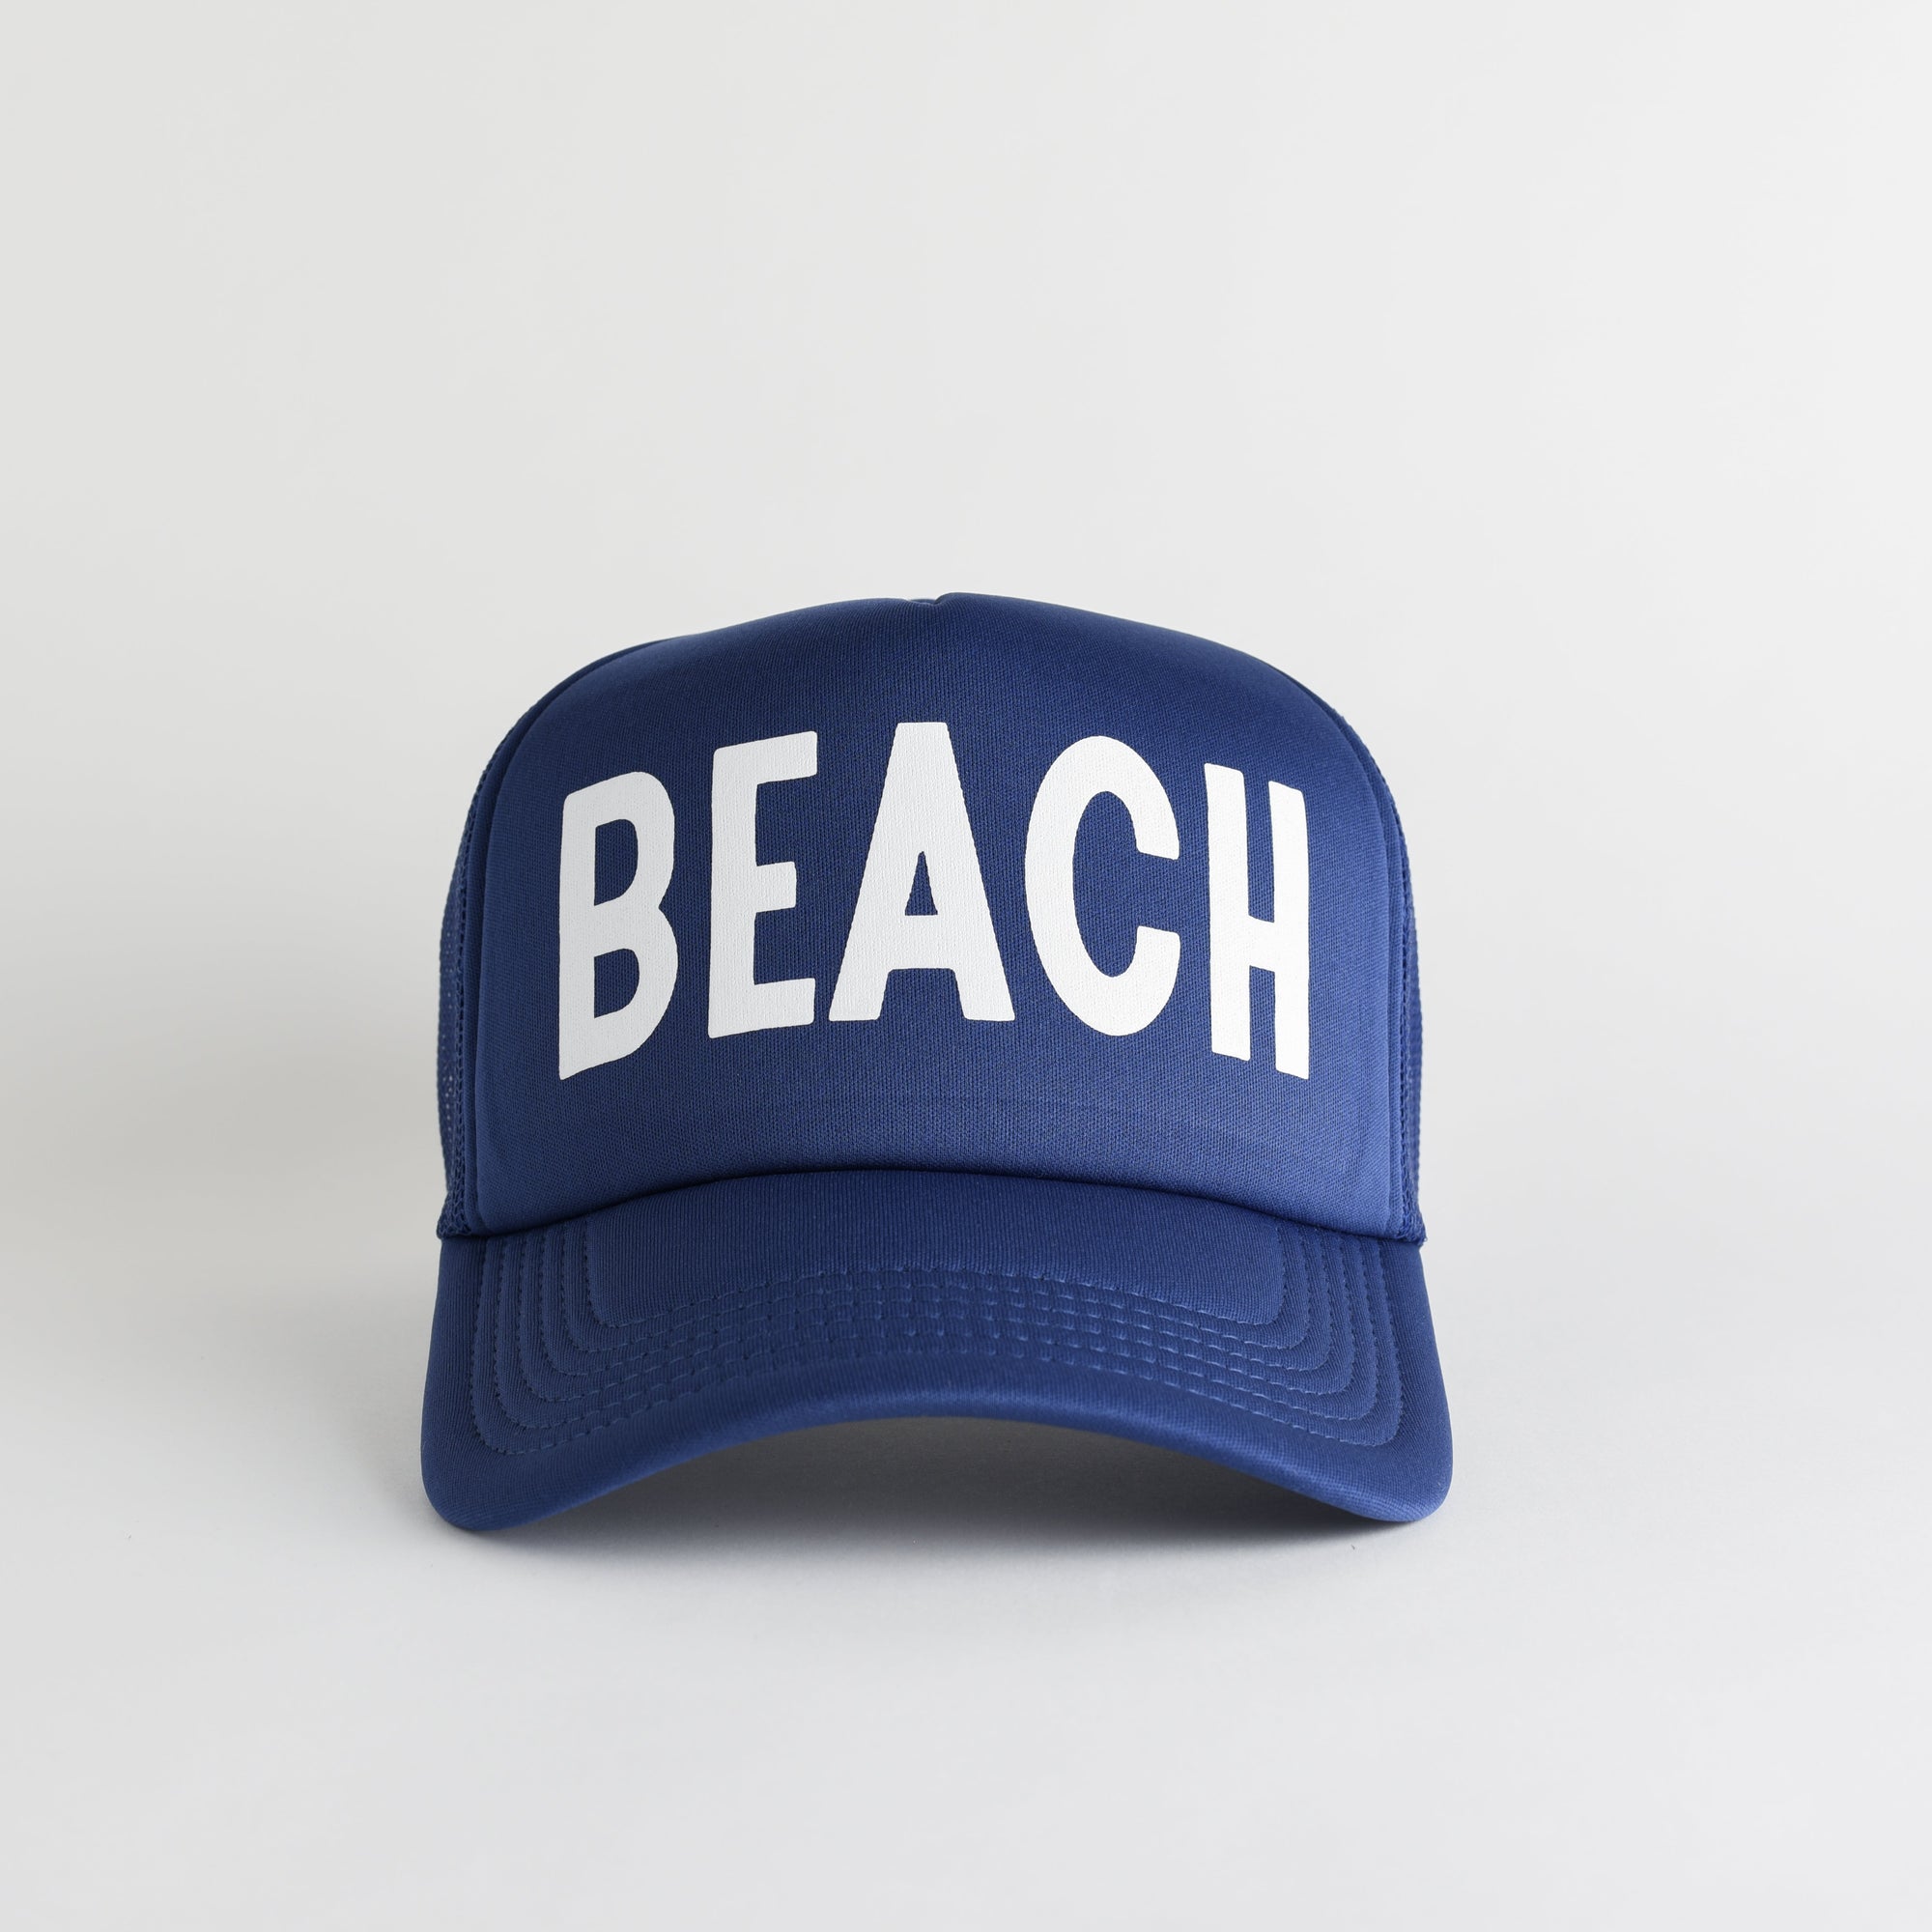 Beach Recycled Trucker Hat - cobalt